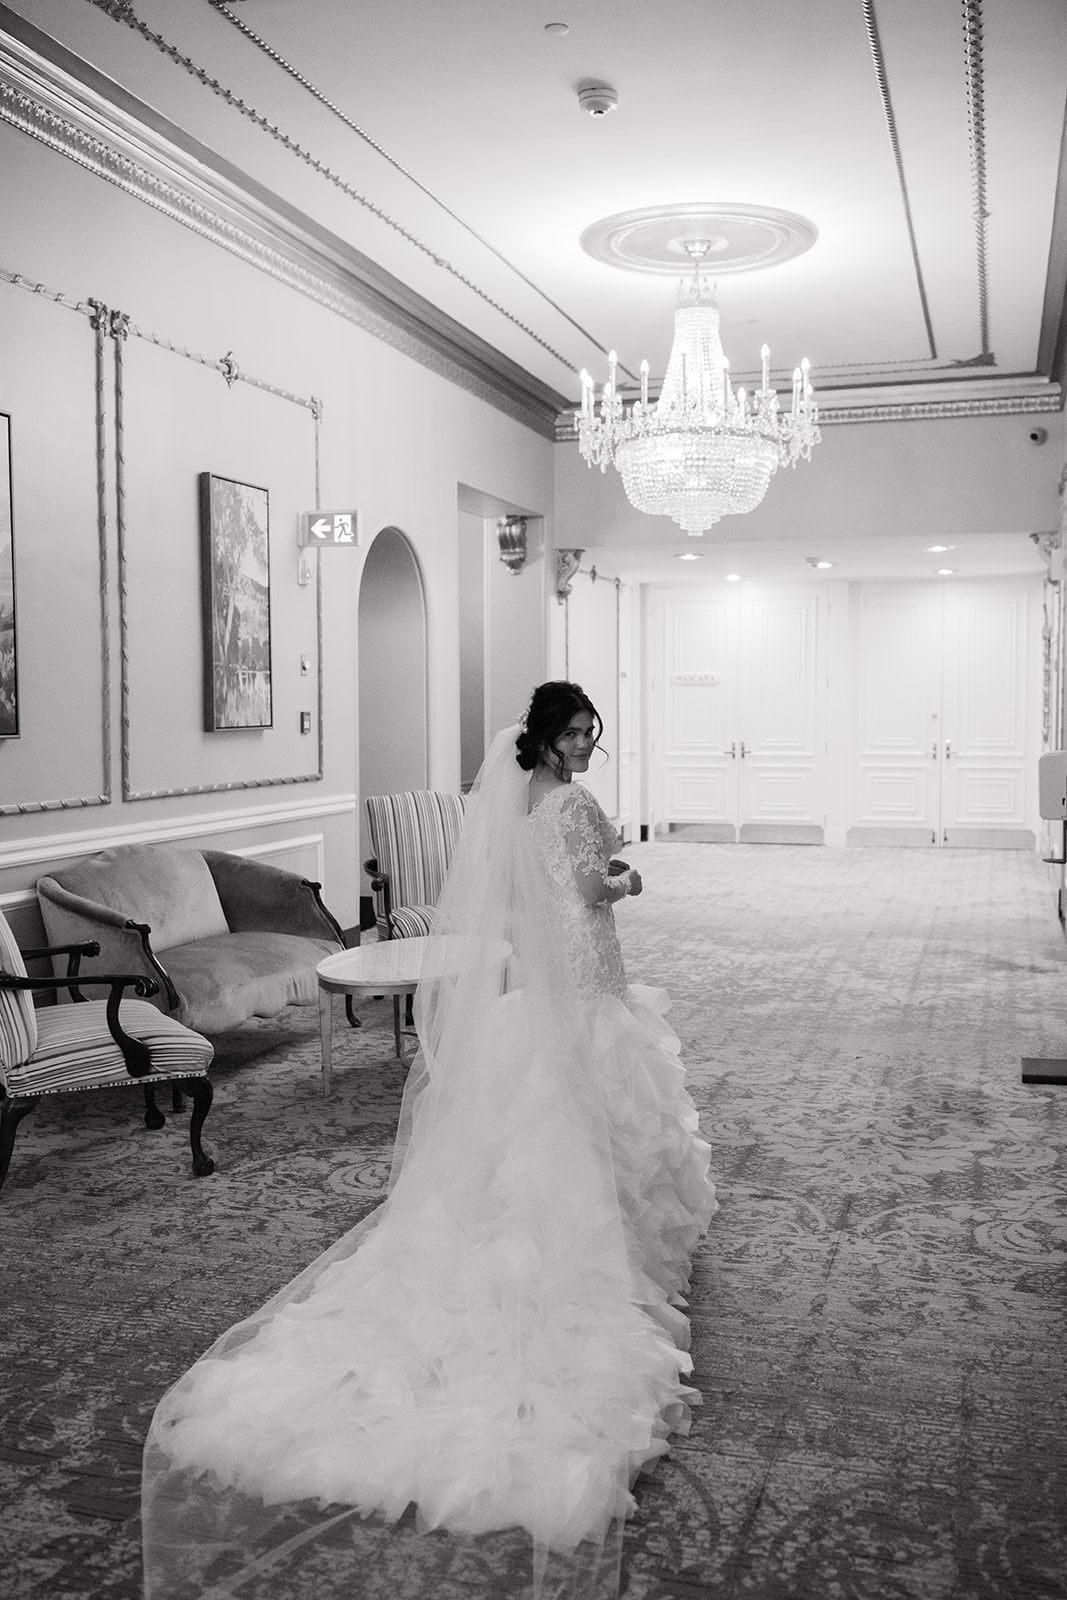 Bridal portrait inspiration for indoors, unique vintage ruffled bridal gown